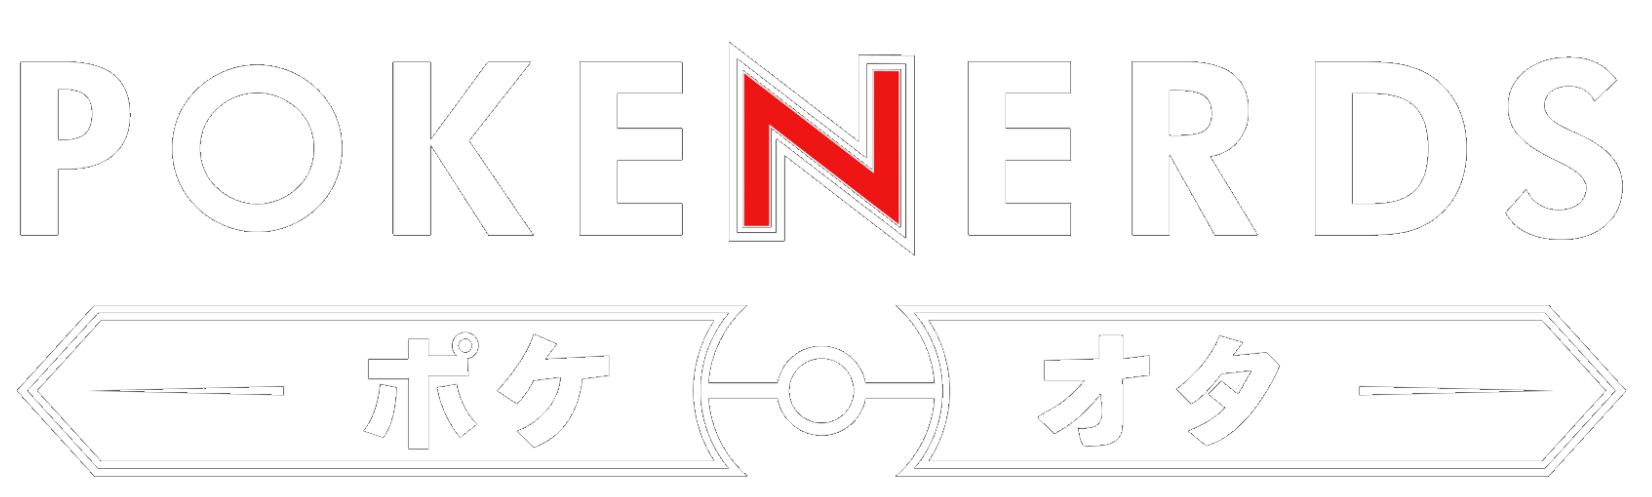 pokenerds-logo-white